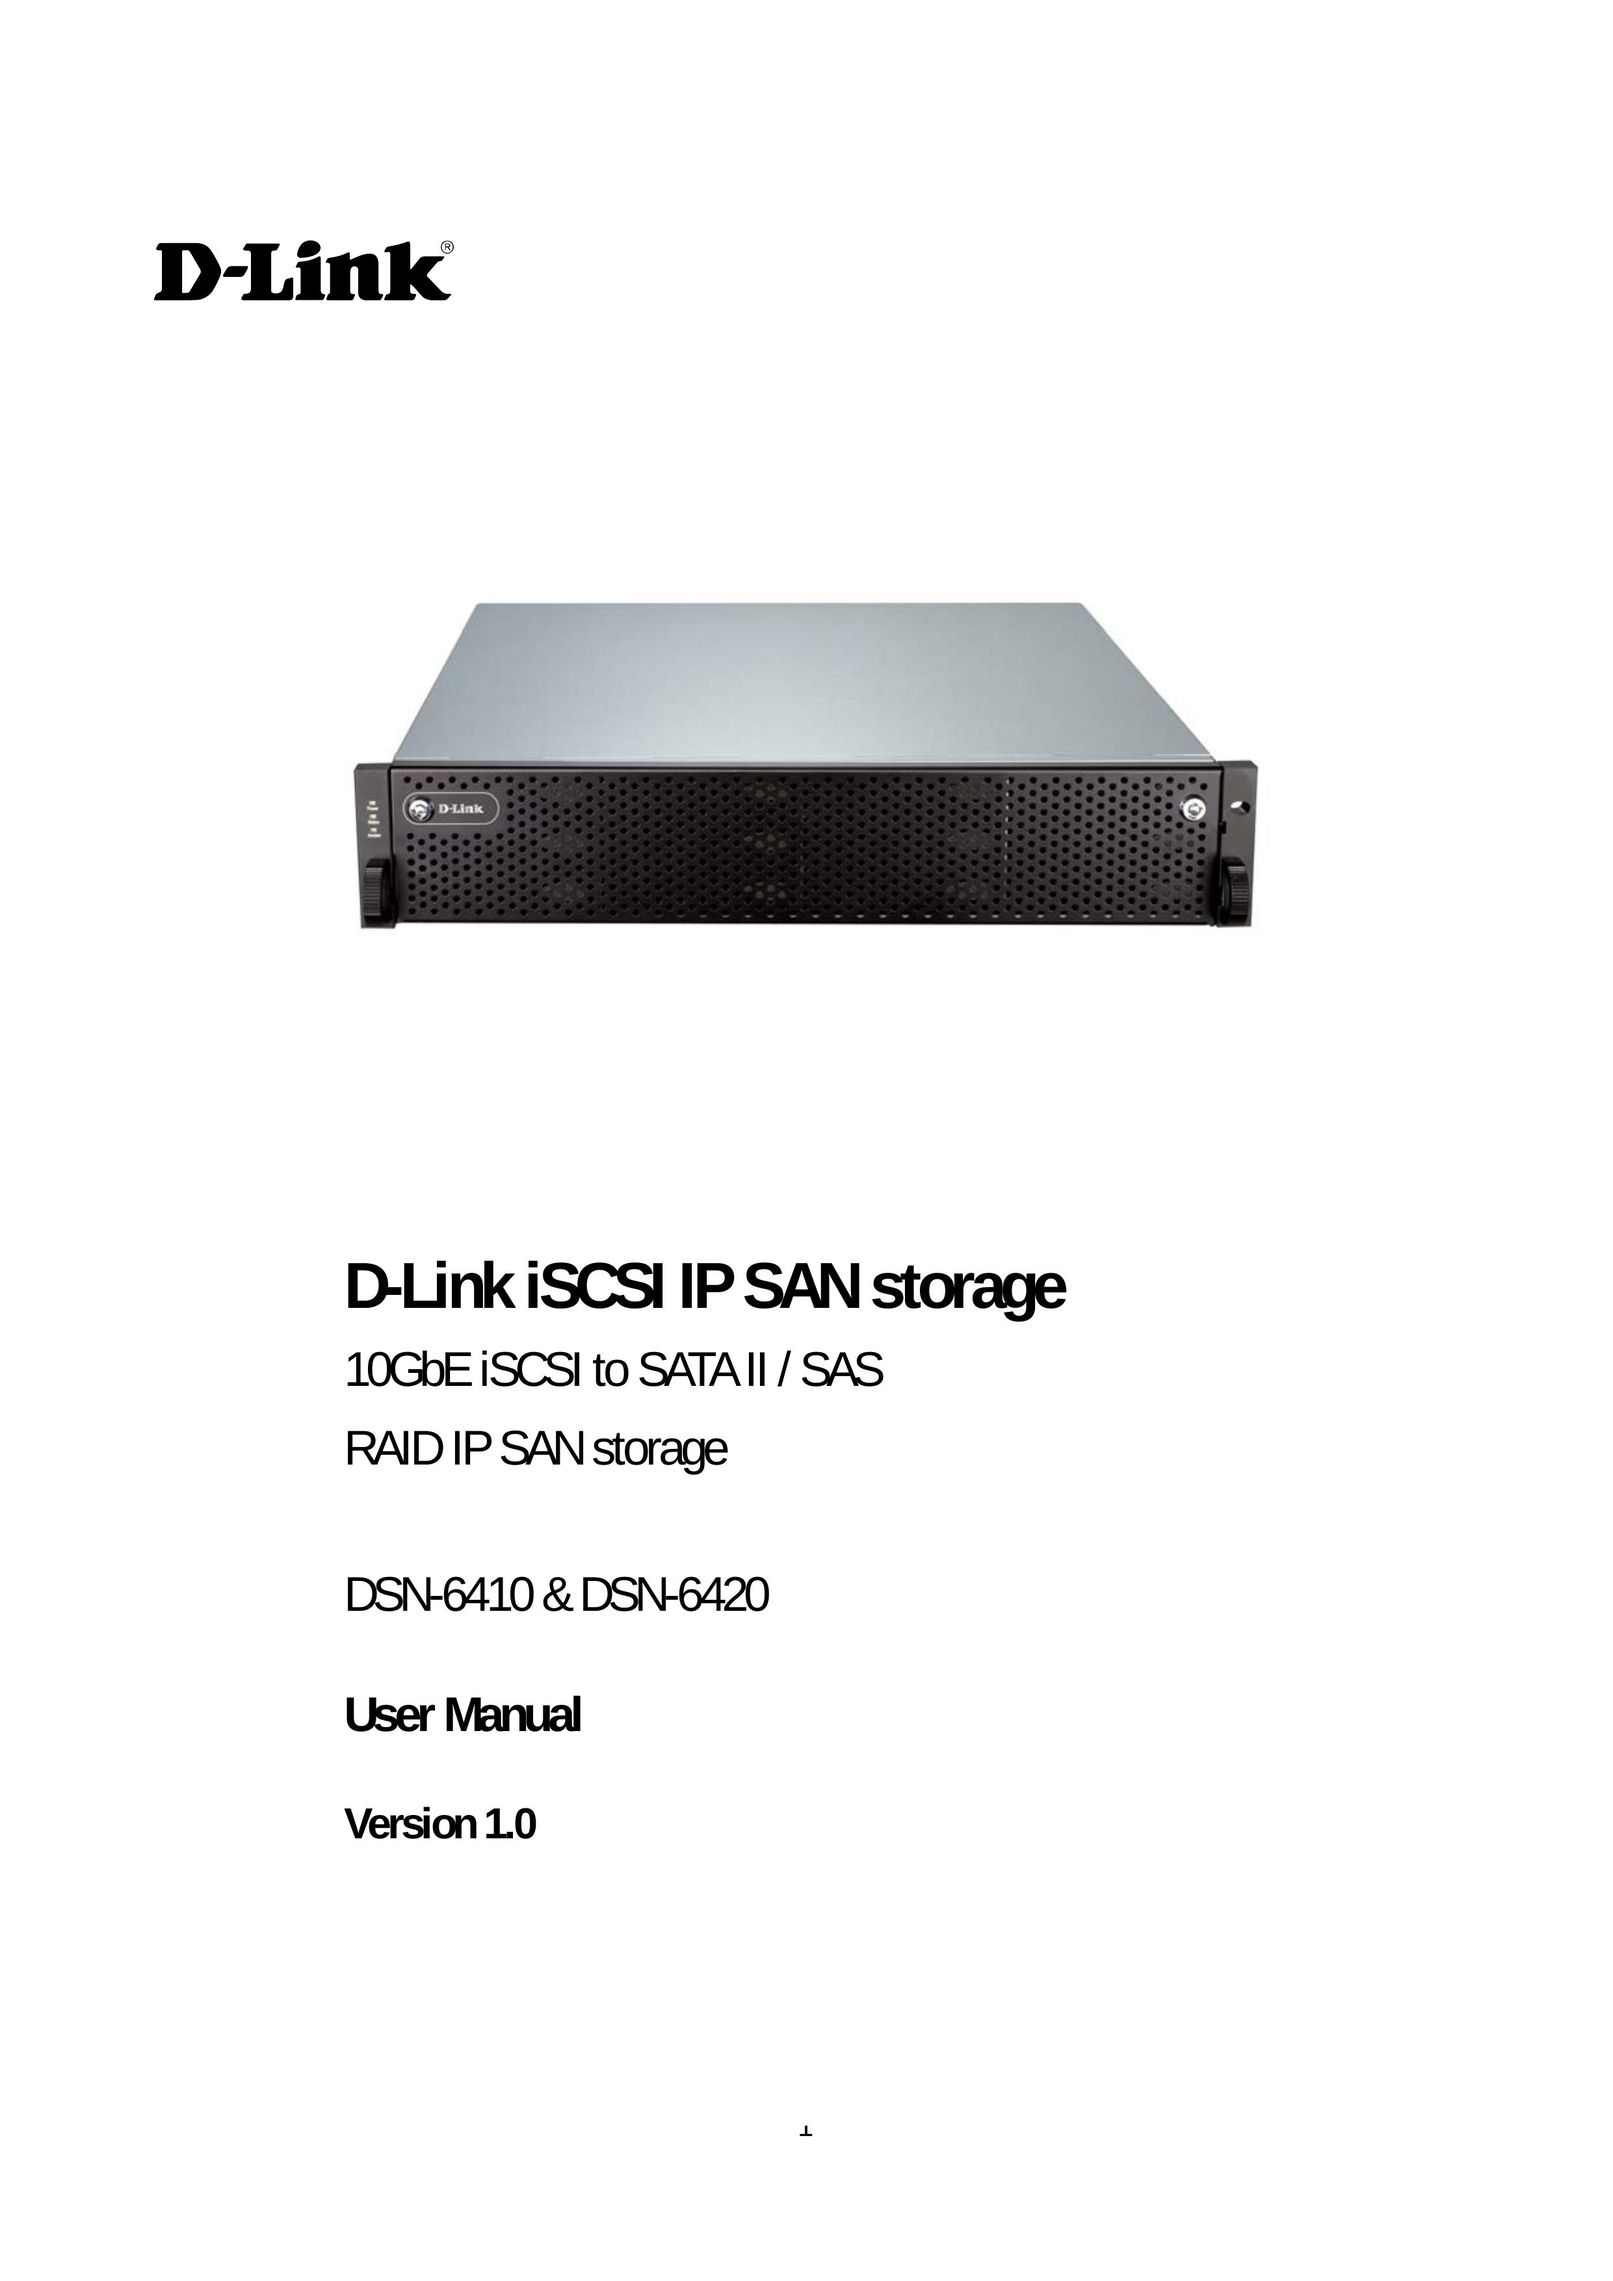 D-Link DSN-6410 Tool Storage User Manual